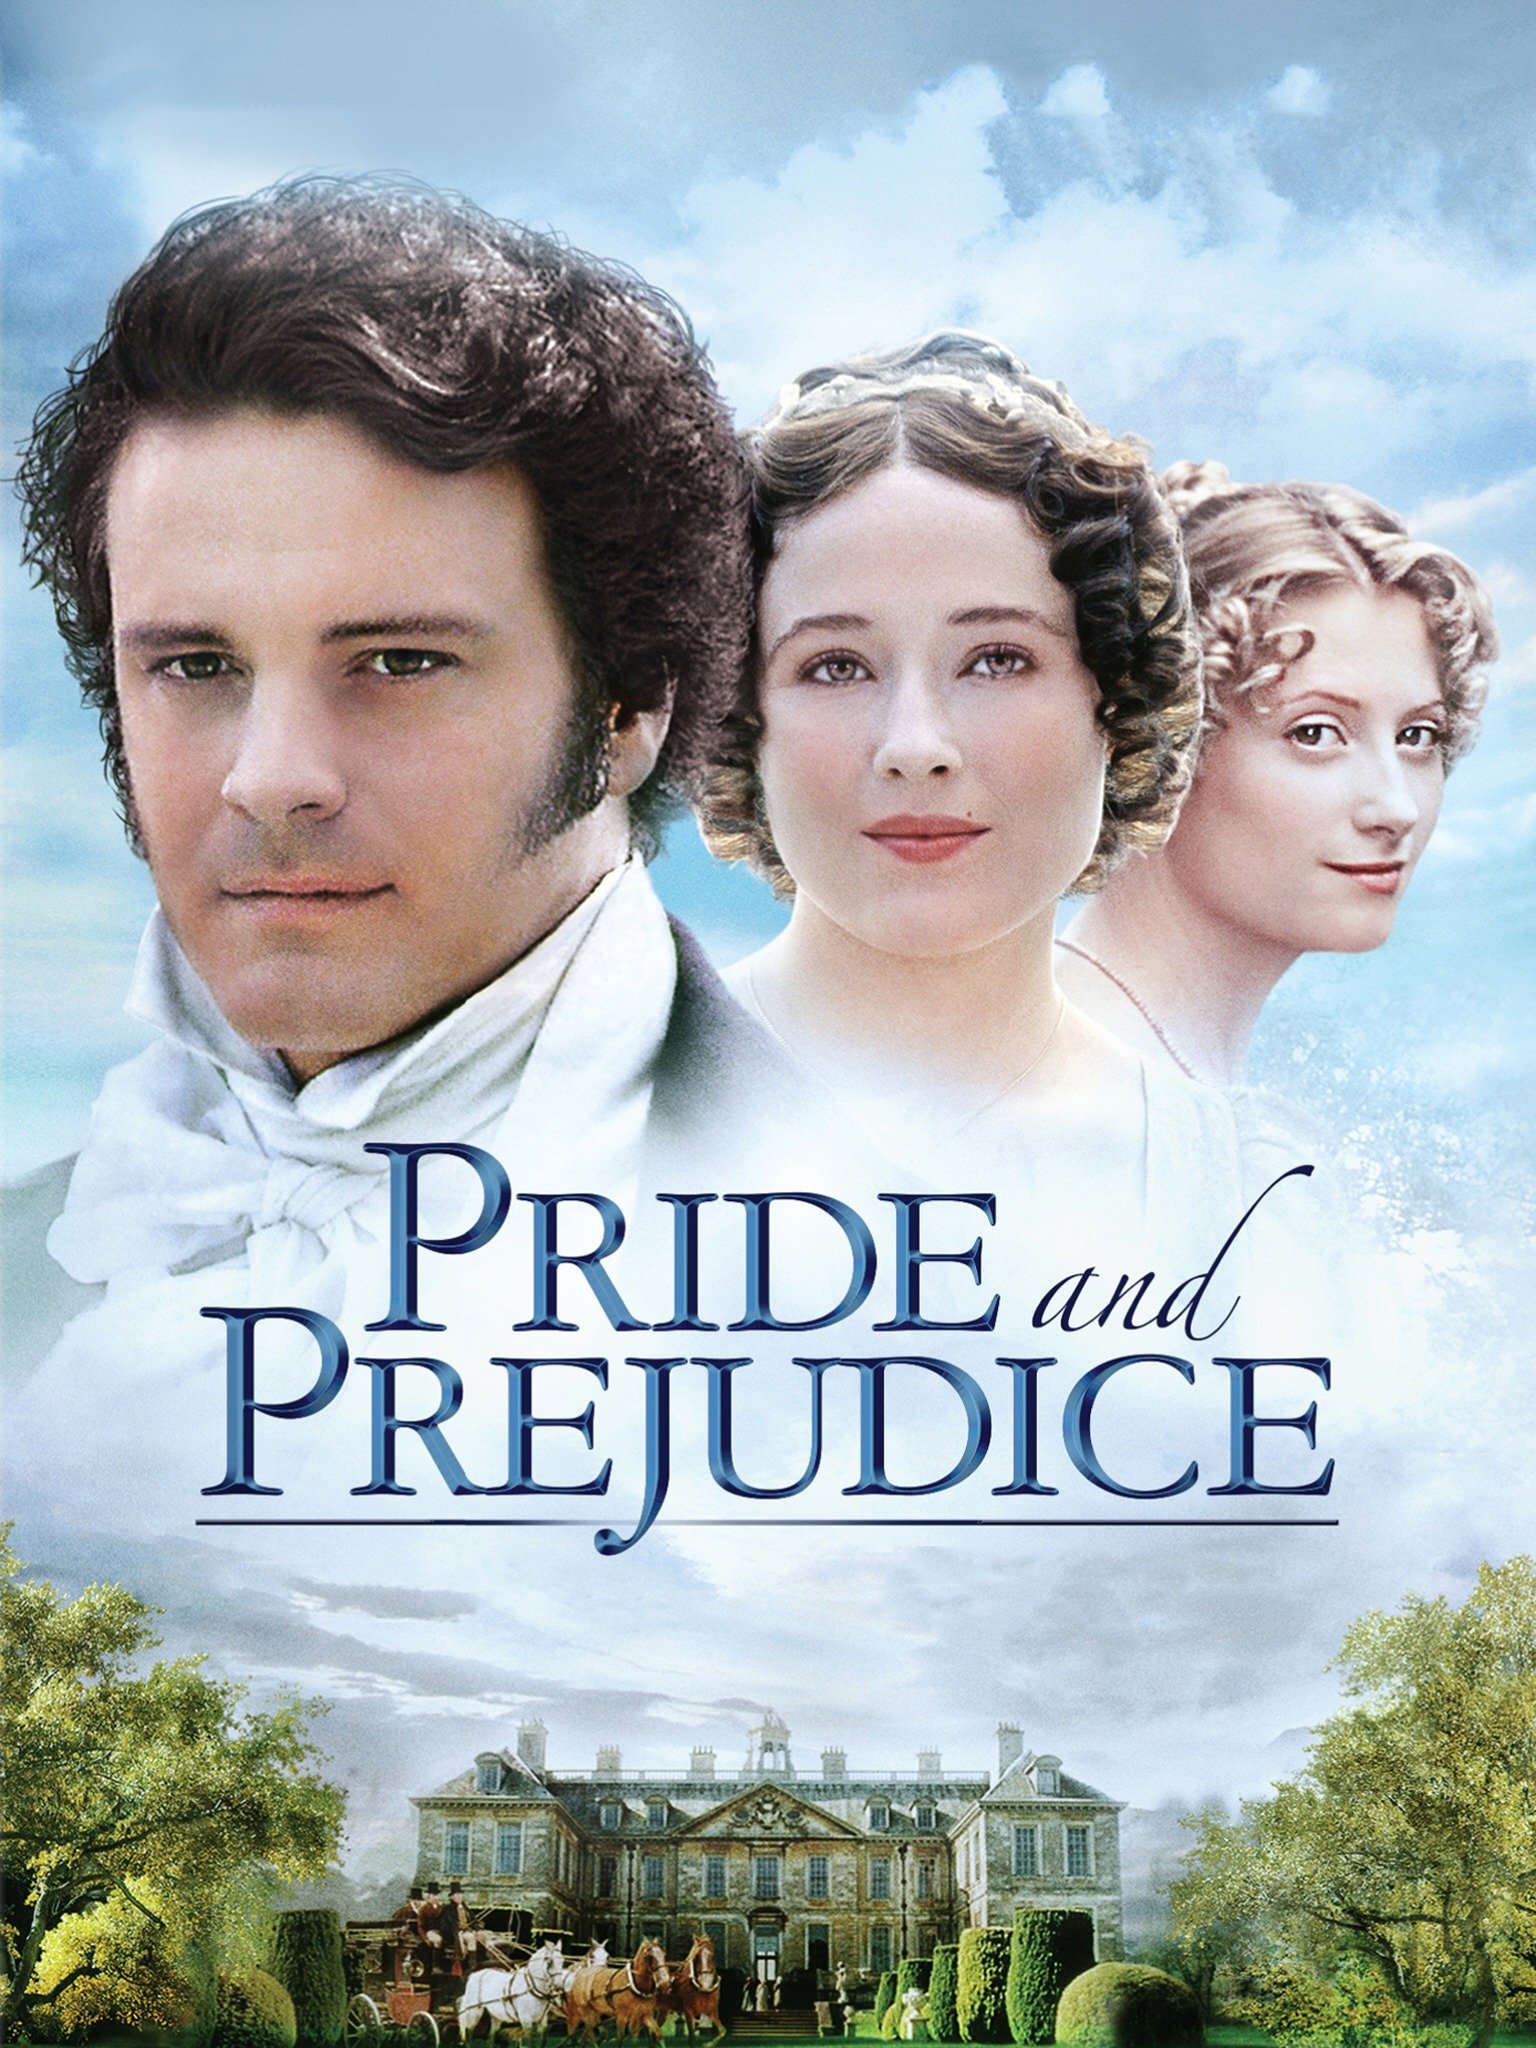 pride and prejudice movie discussion questions